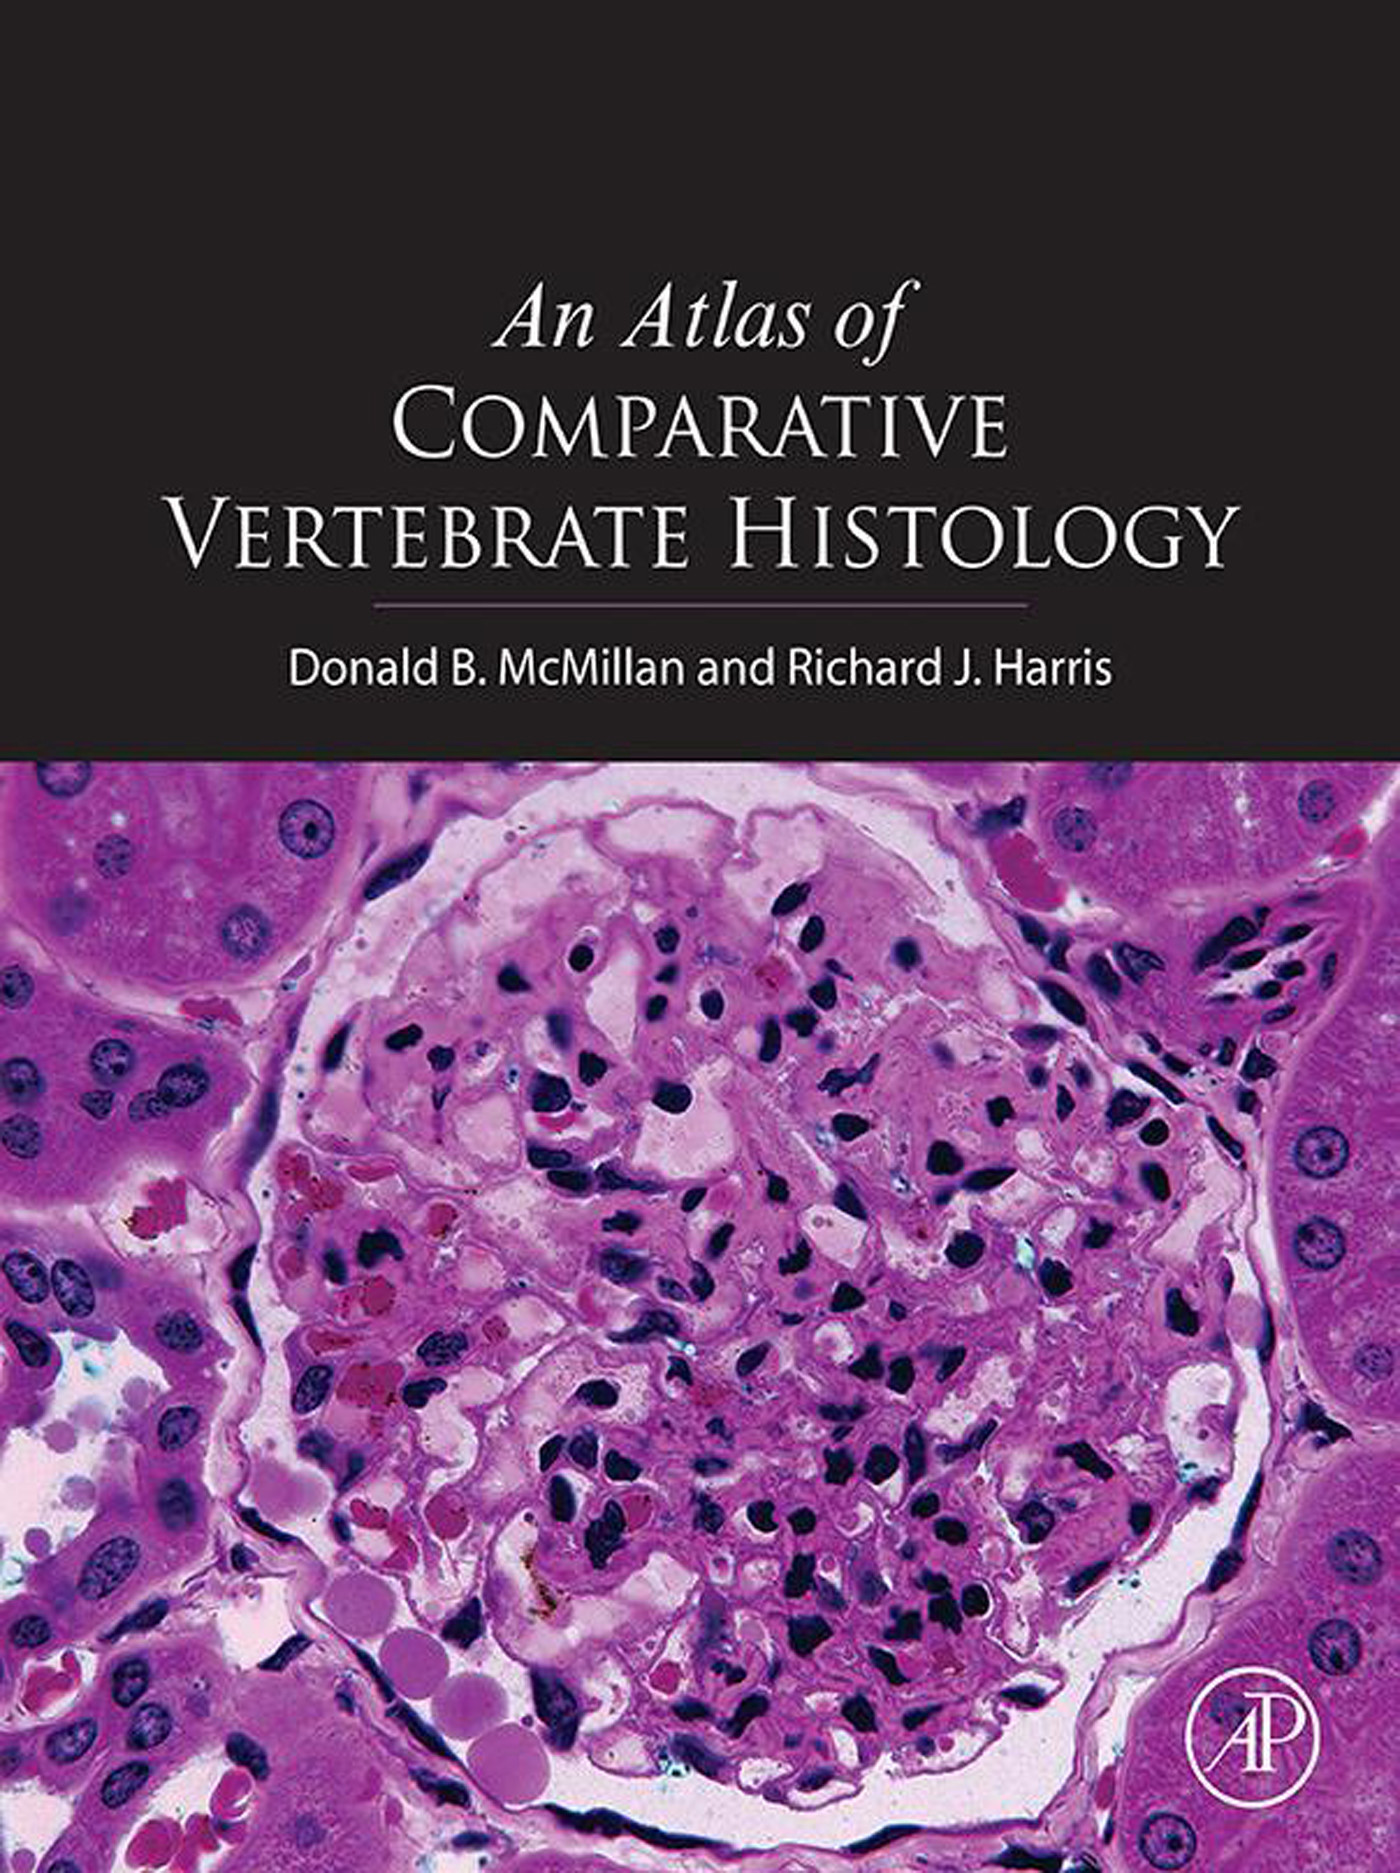 An Atlas of Comparative Vertebrate Histology